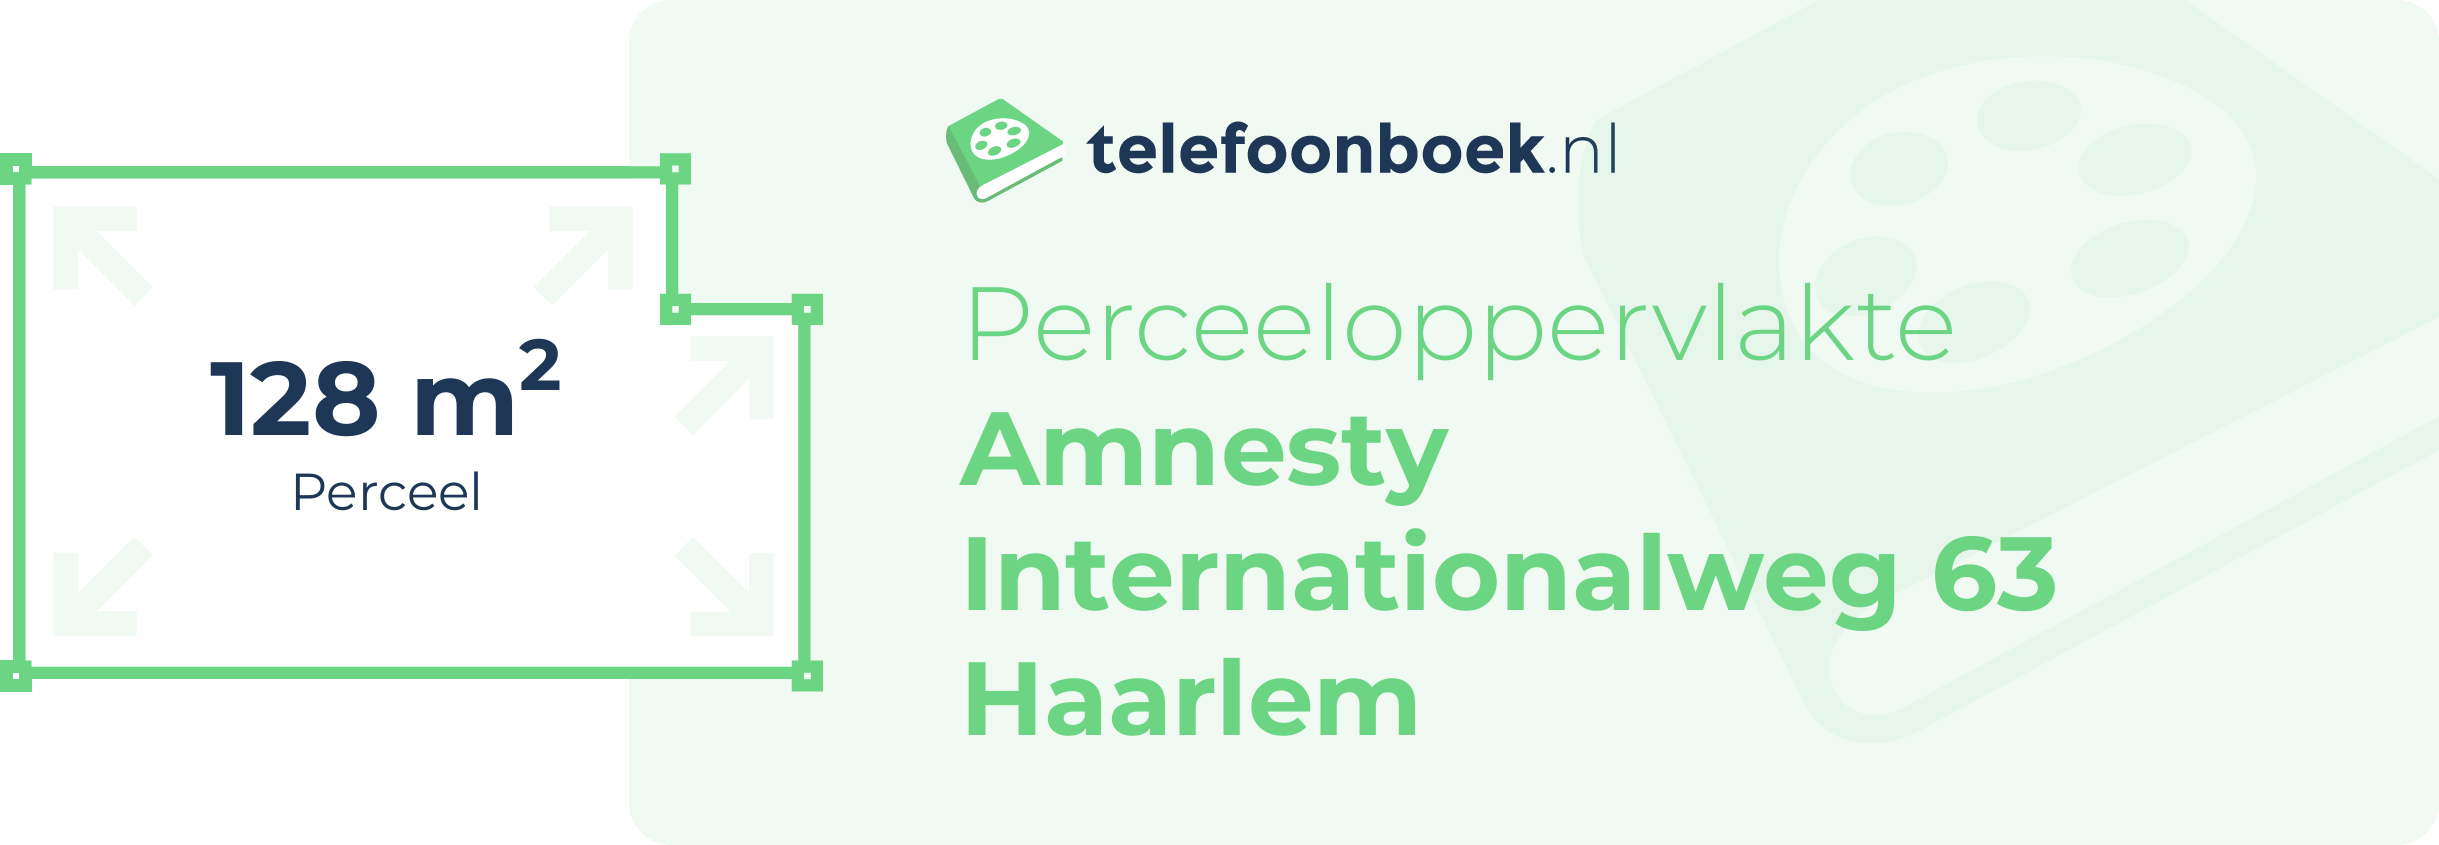 Perceeloppervlakte Amnesty Internationalweg 63 Haarlem